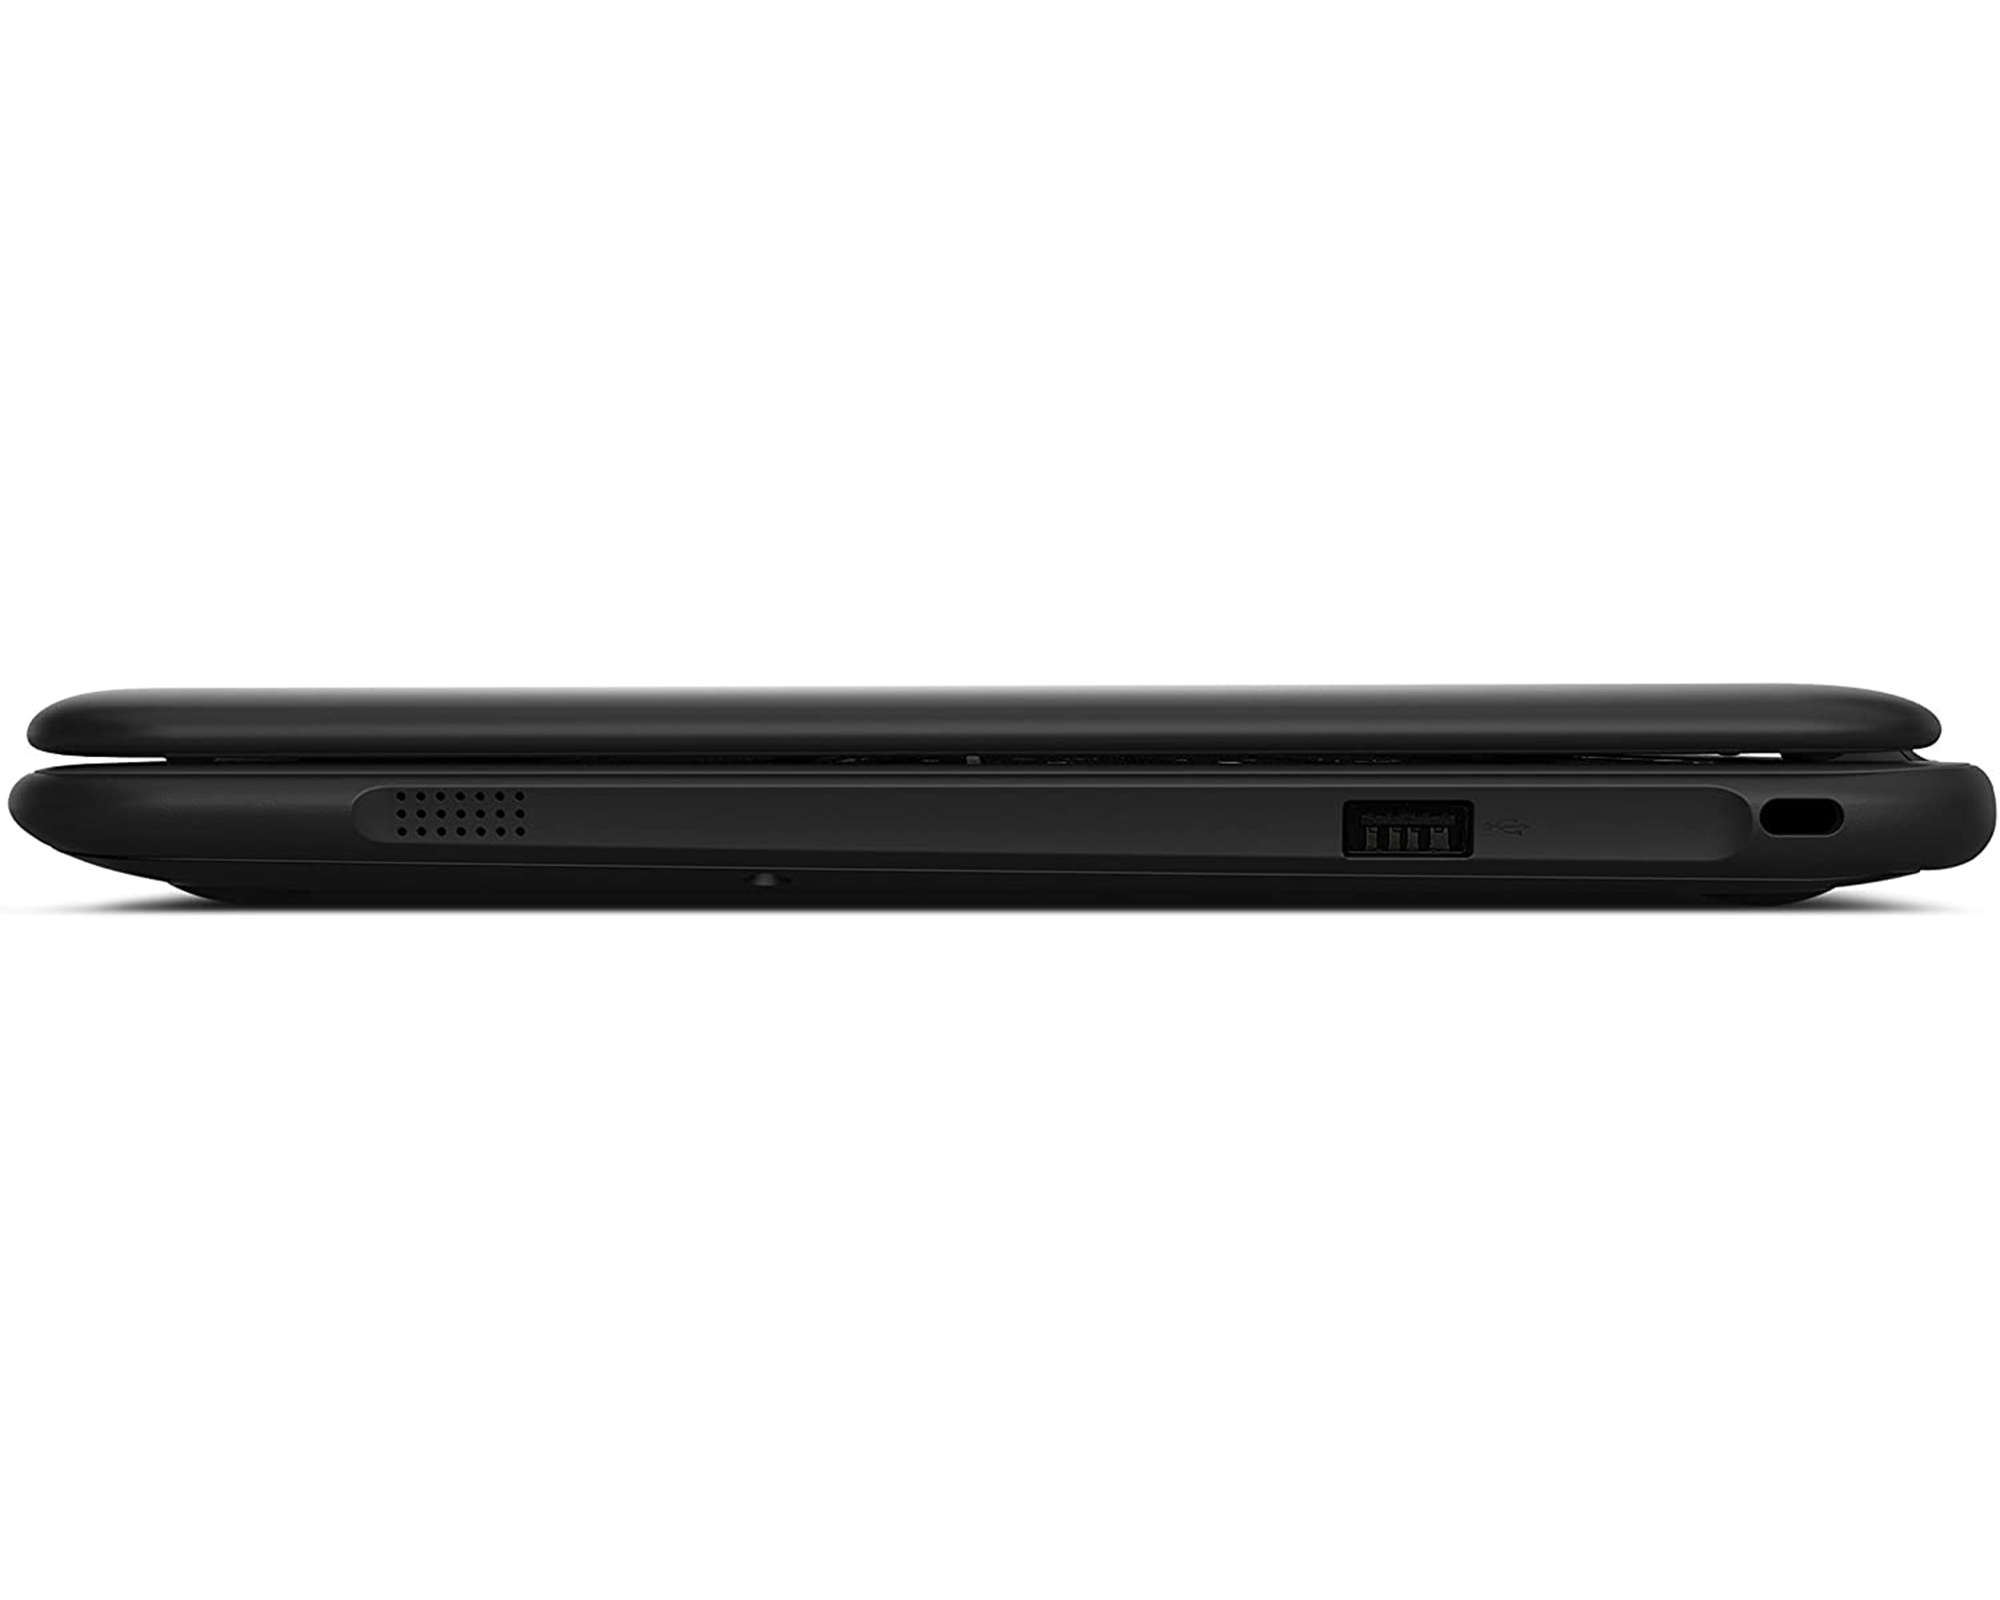 Used Lenovo N22 Series Chromebook 11.6-Inch (2GB RAM, 16GB HDD, Intel Celeron 1.60GHz) - image 8 of 10